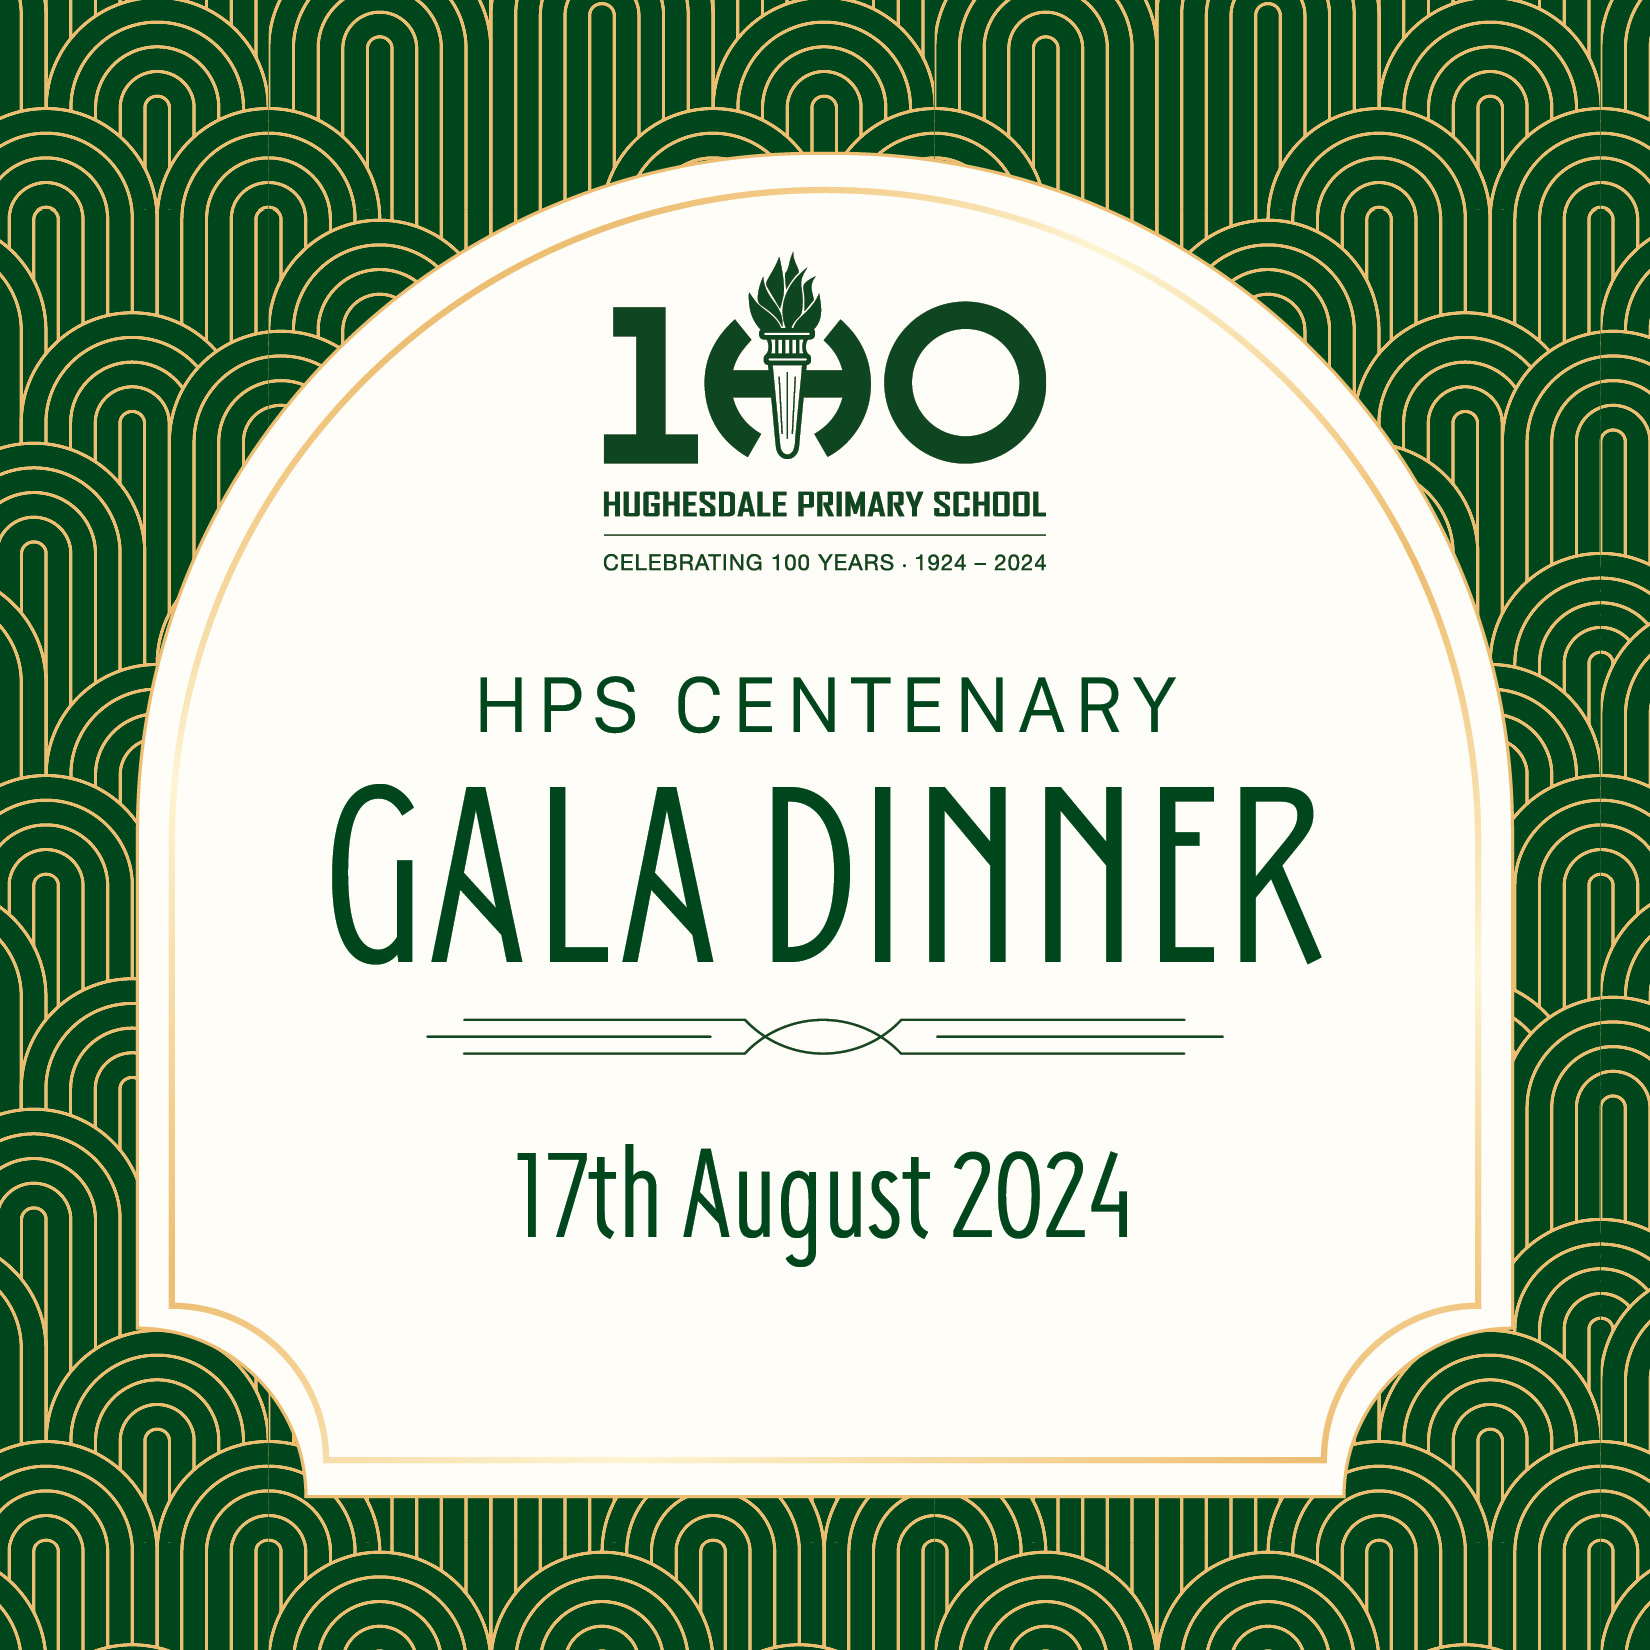 Hughesdale Primary School Celebrating 100 Years - Centenary Logo in Green